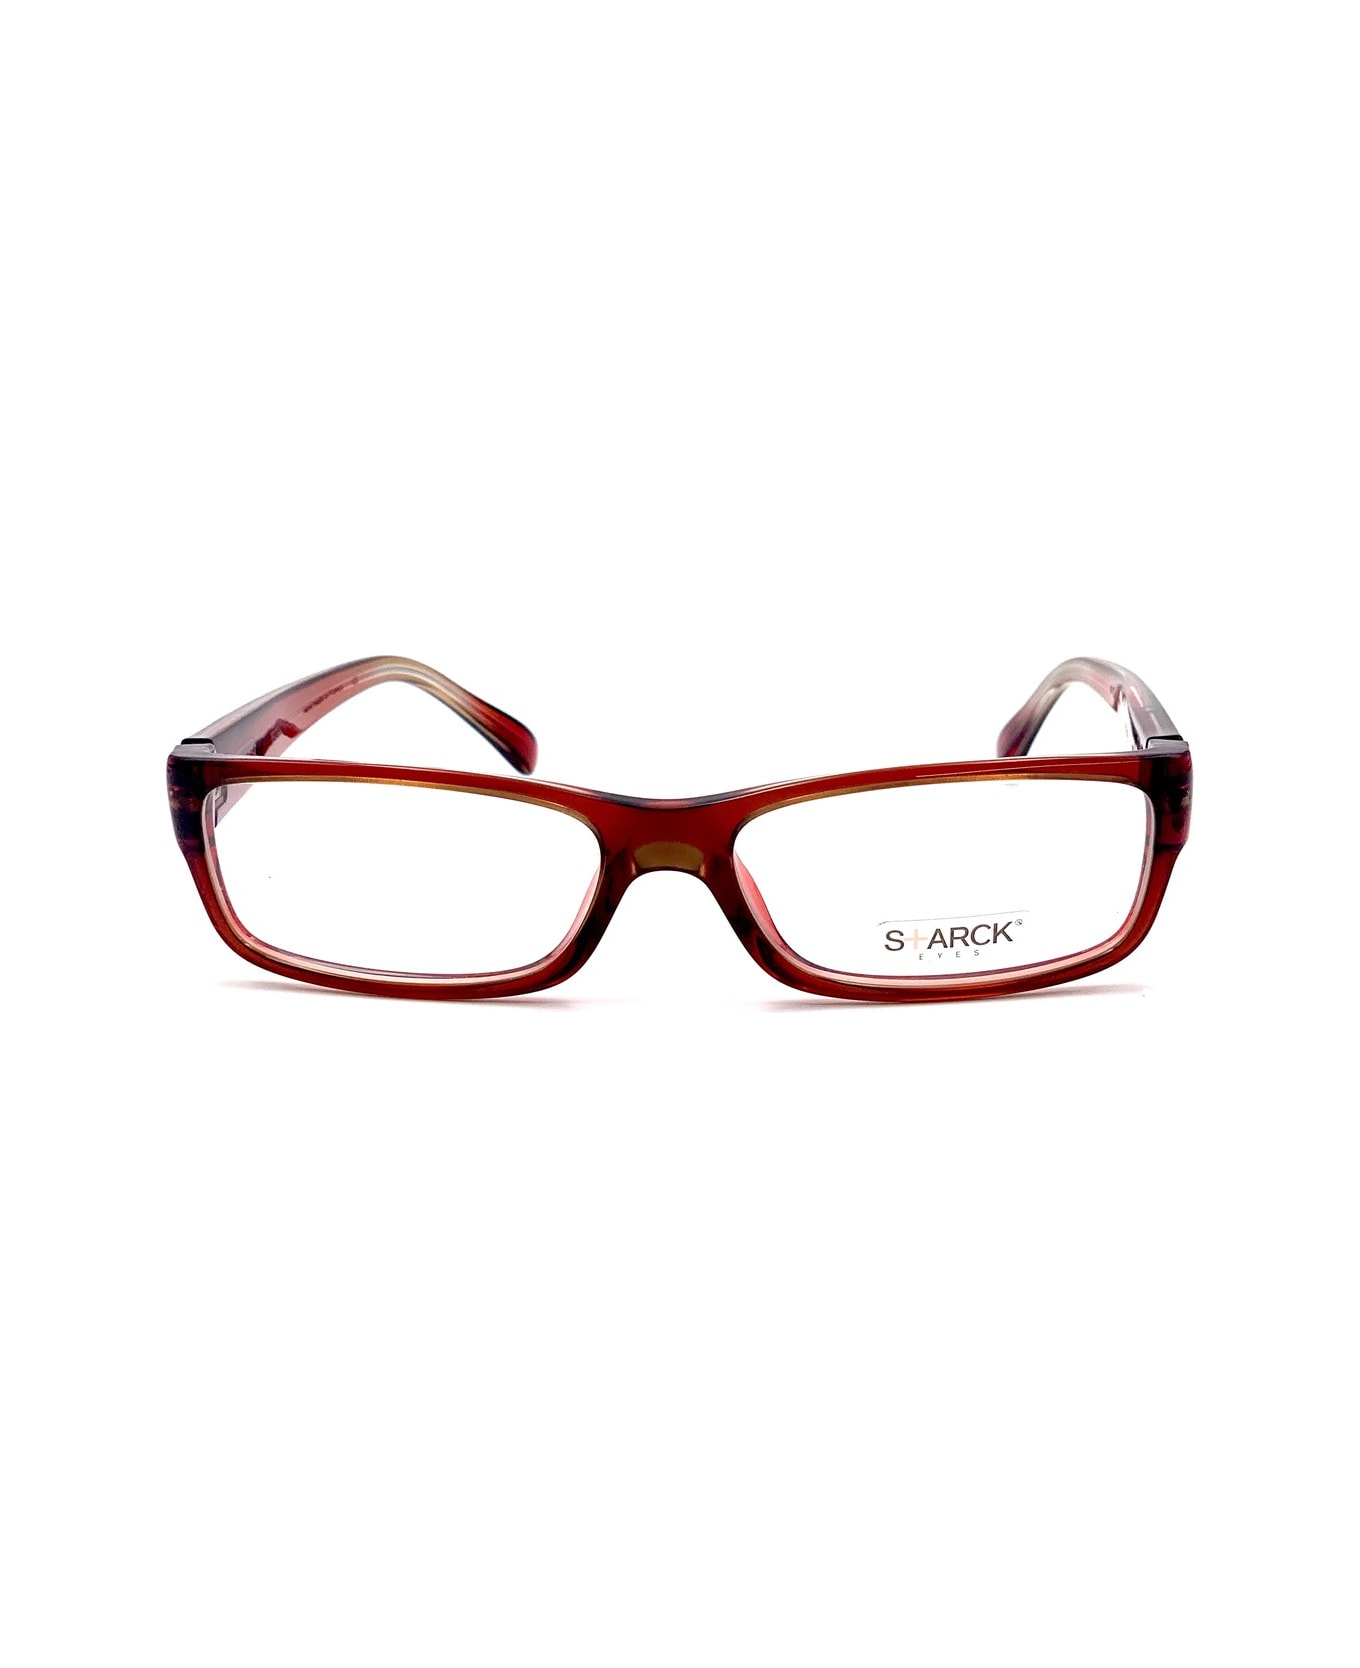 Philippe Starck P0690 Glasses - Rosso